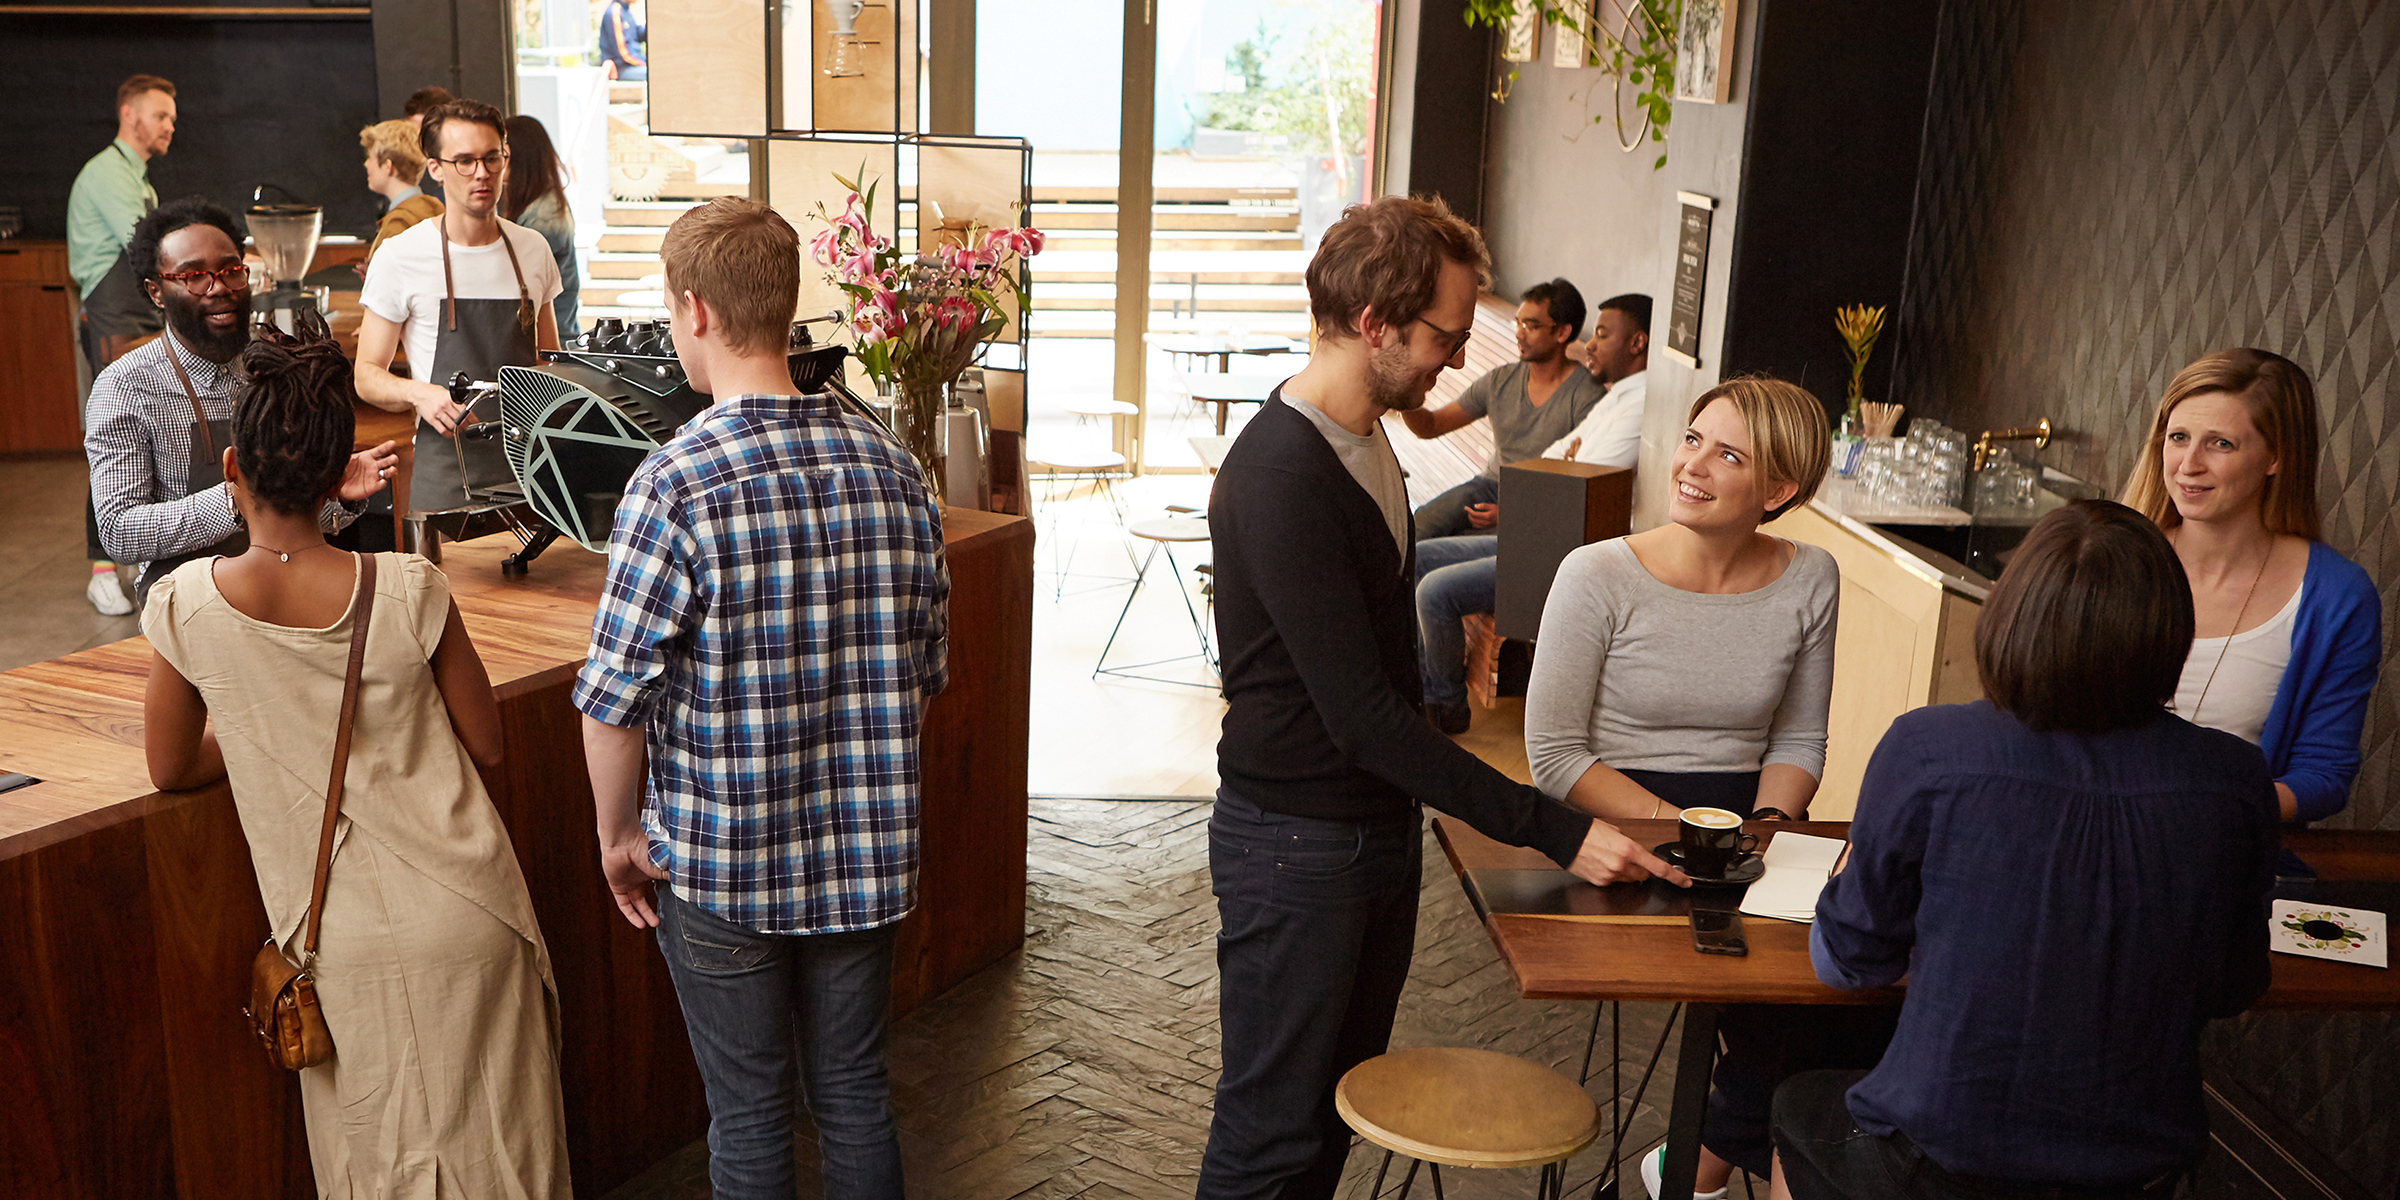 A bustling café scene | Source: Shutterstock